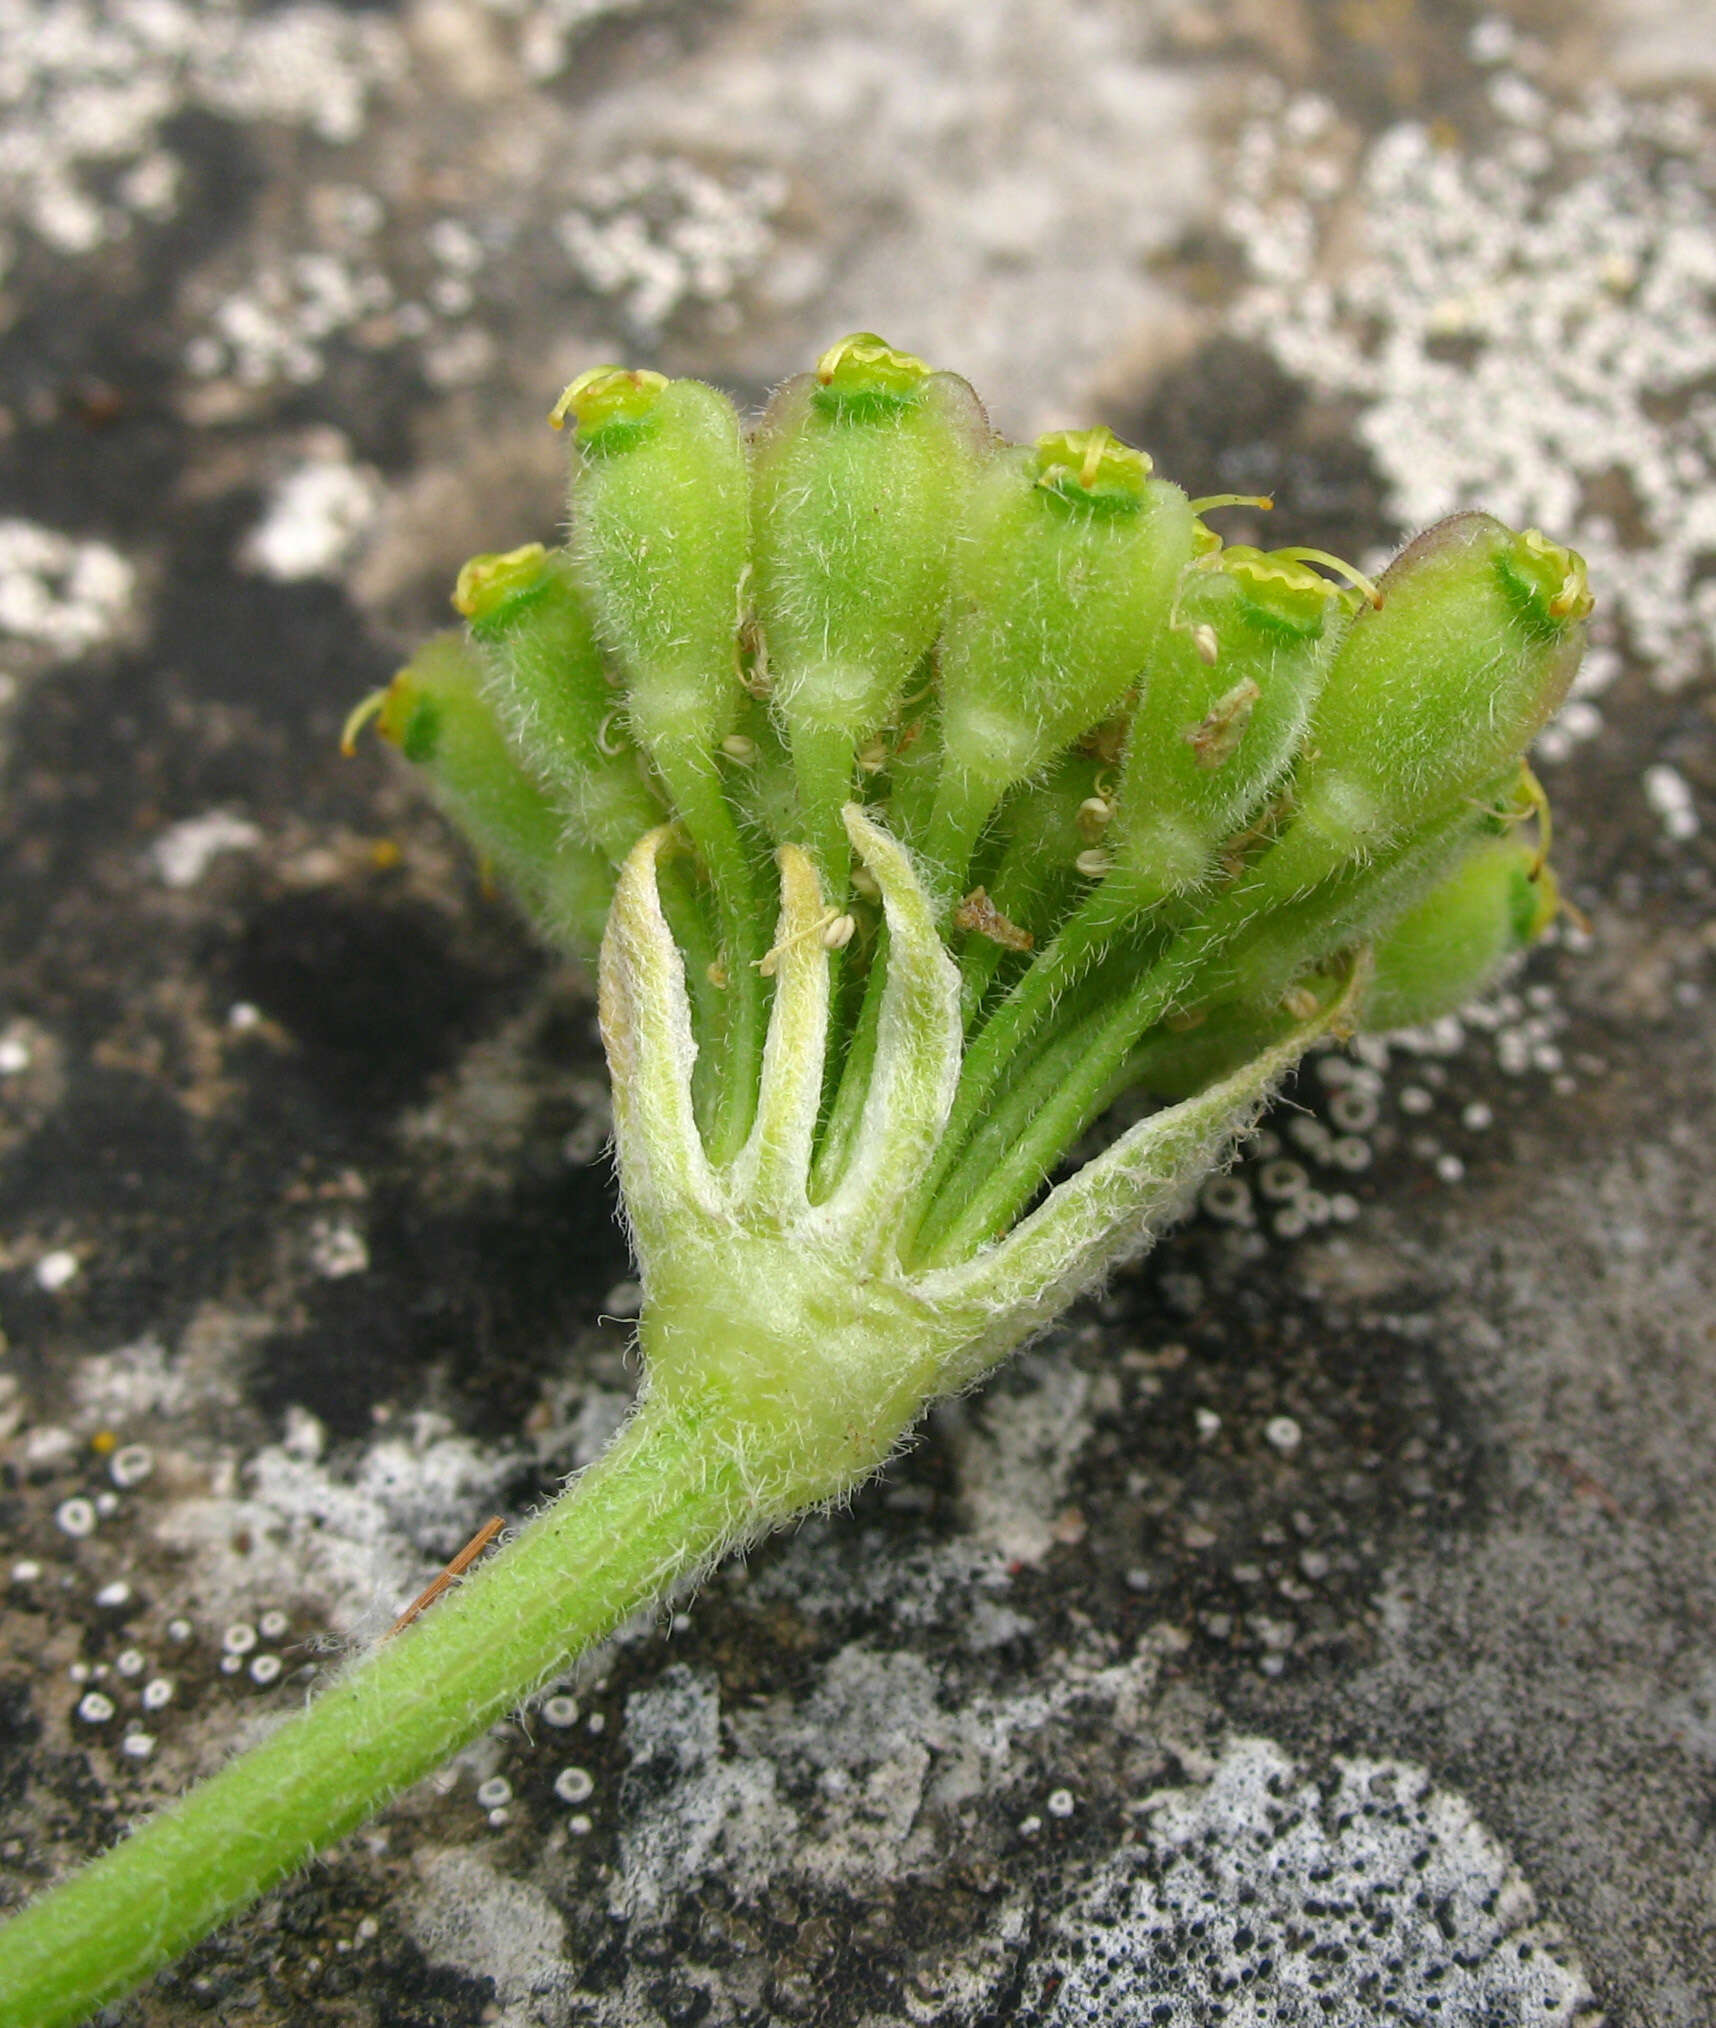 Image of Zosima absinthifolia (Vent.) Link